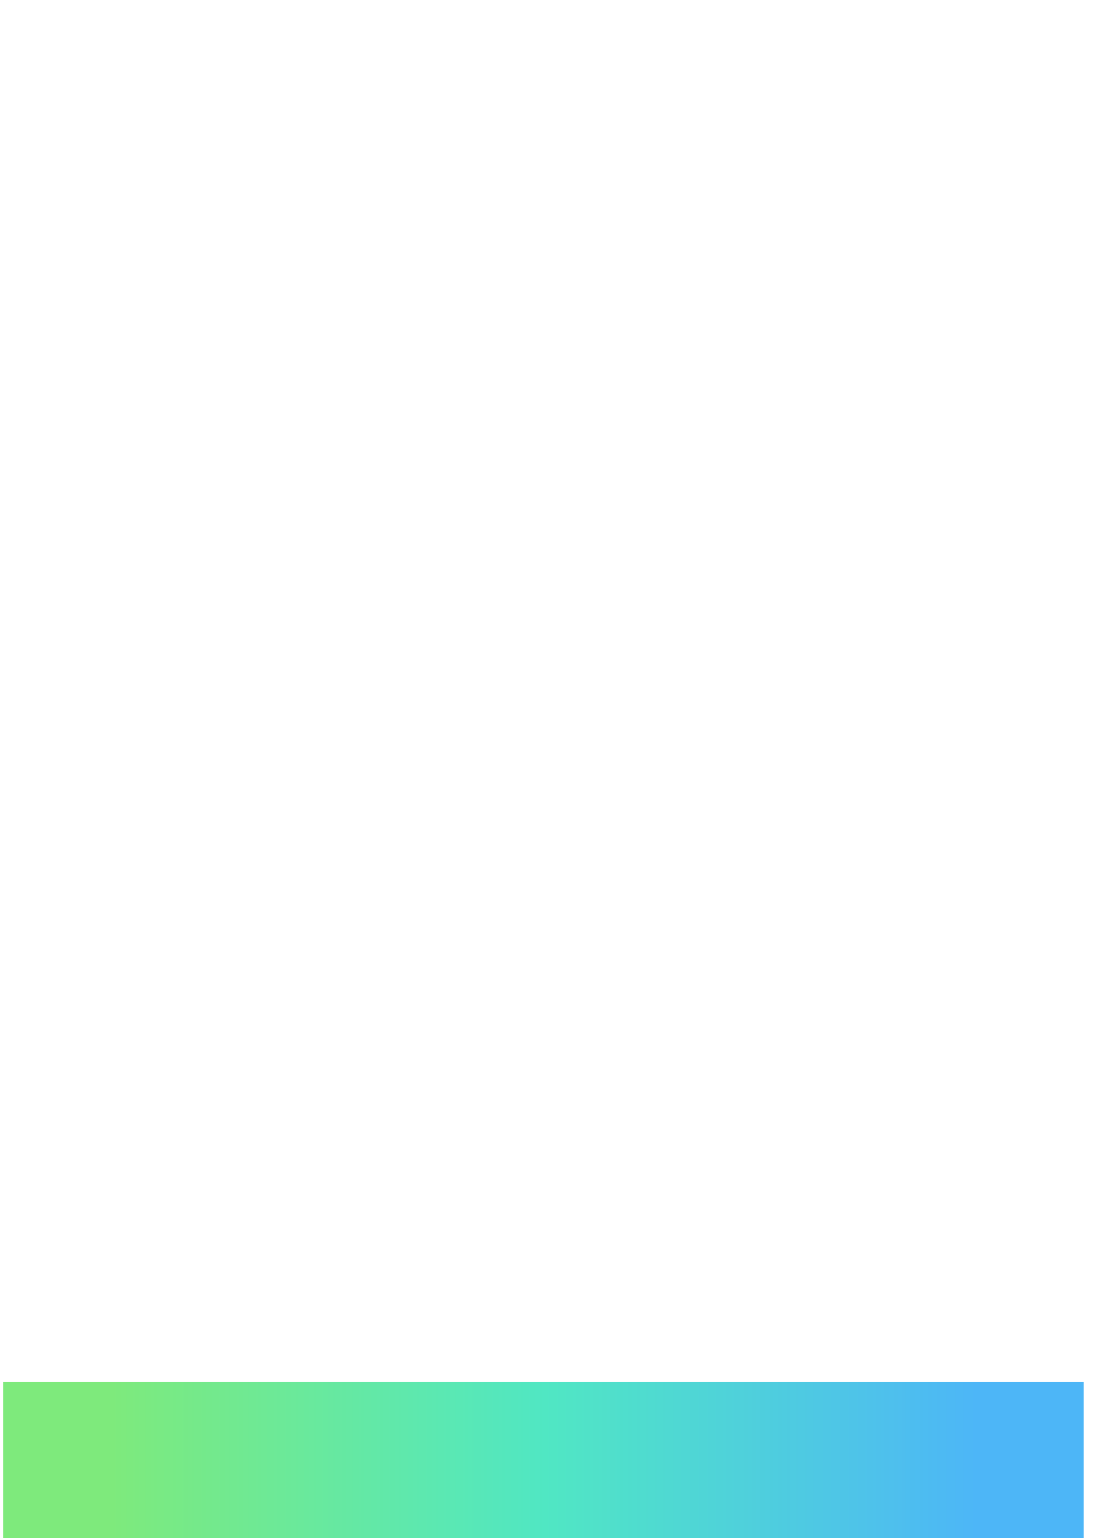 Aker Horizons logo pour fonds sombres (PNG transparent)